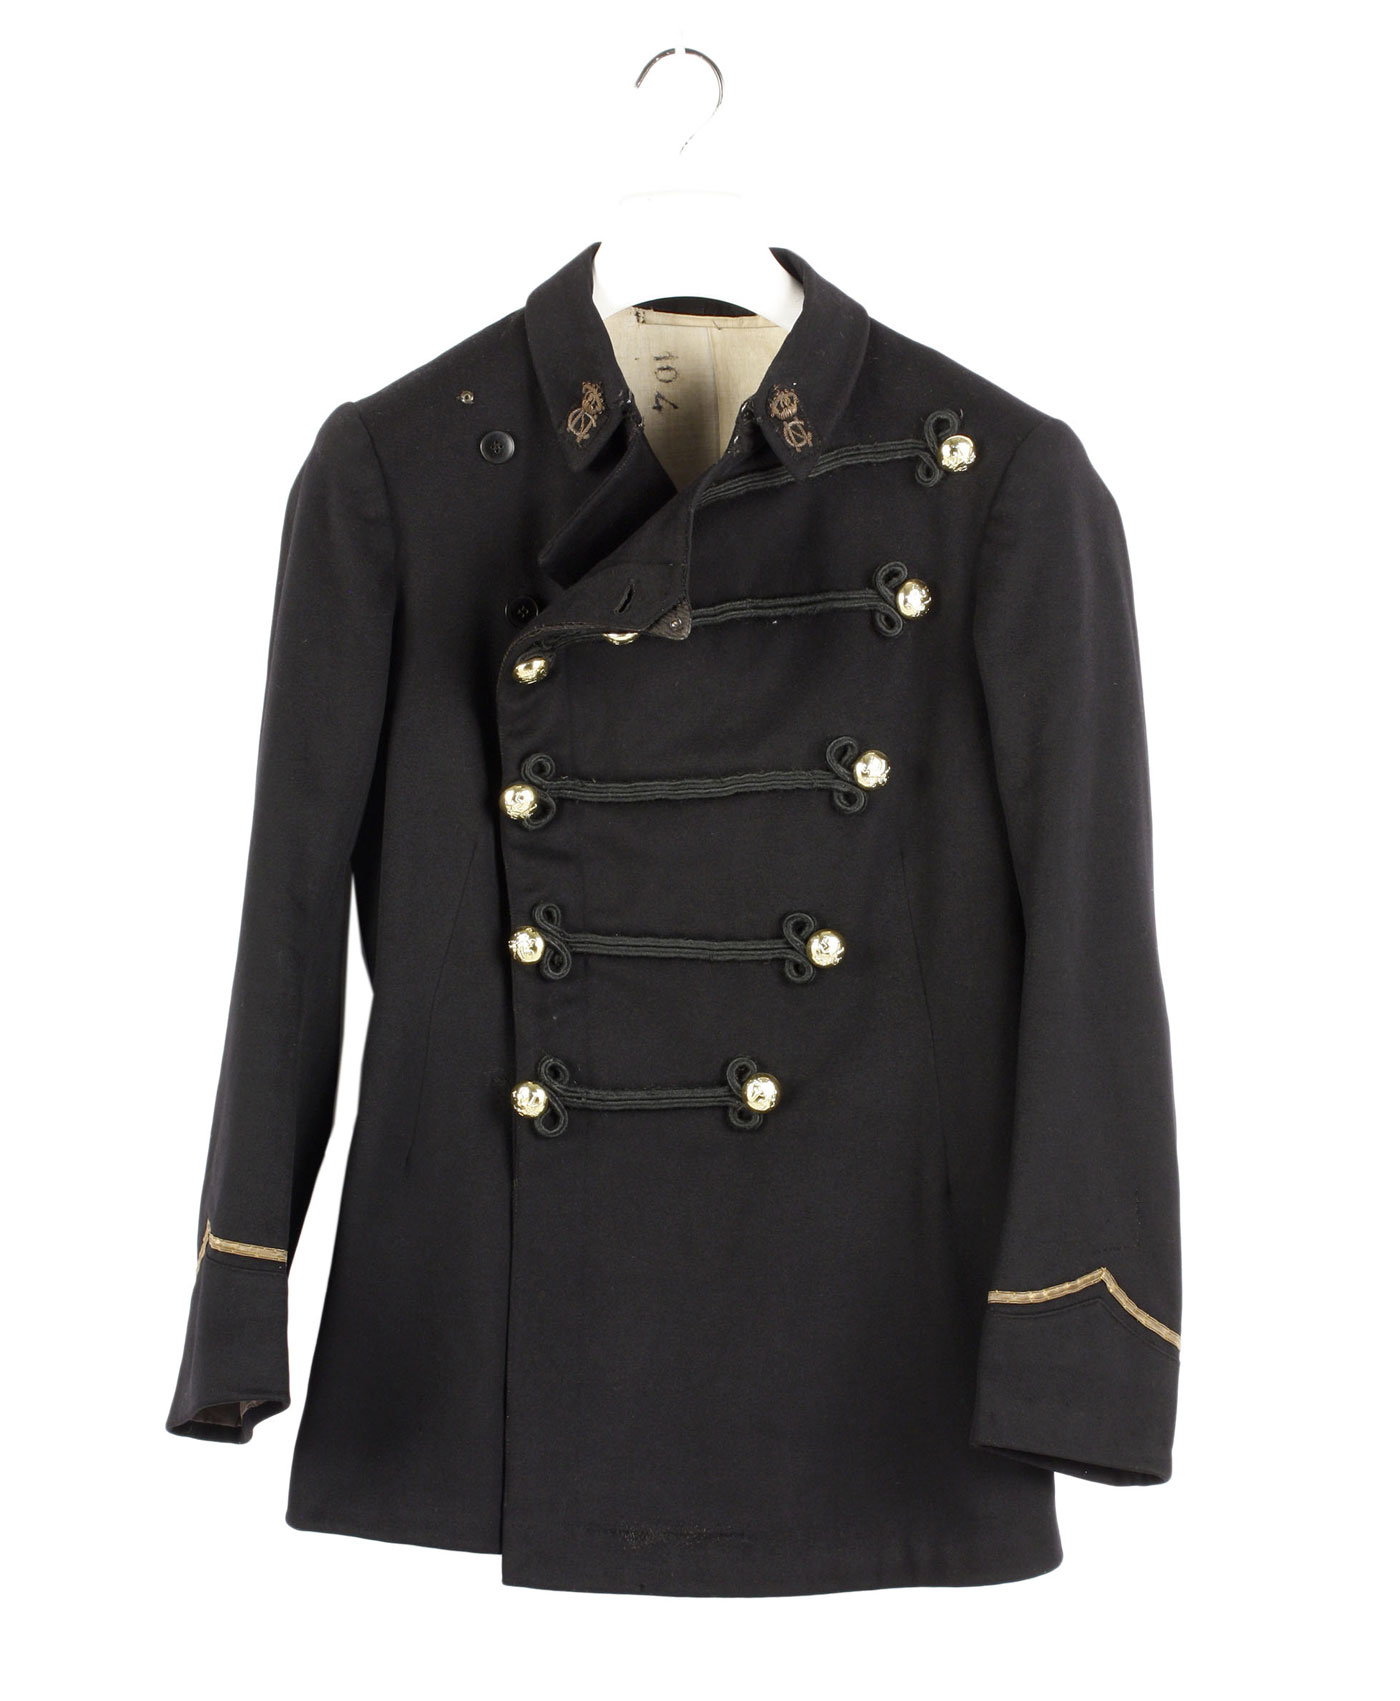 Military Uniform Beginning of 19th Century